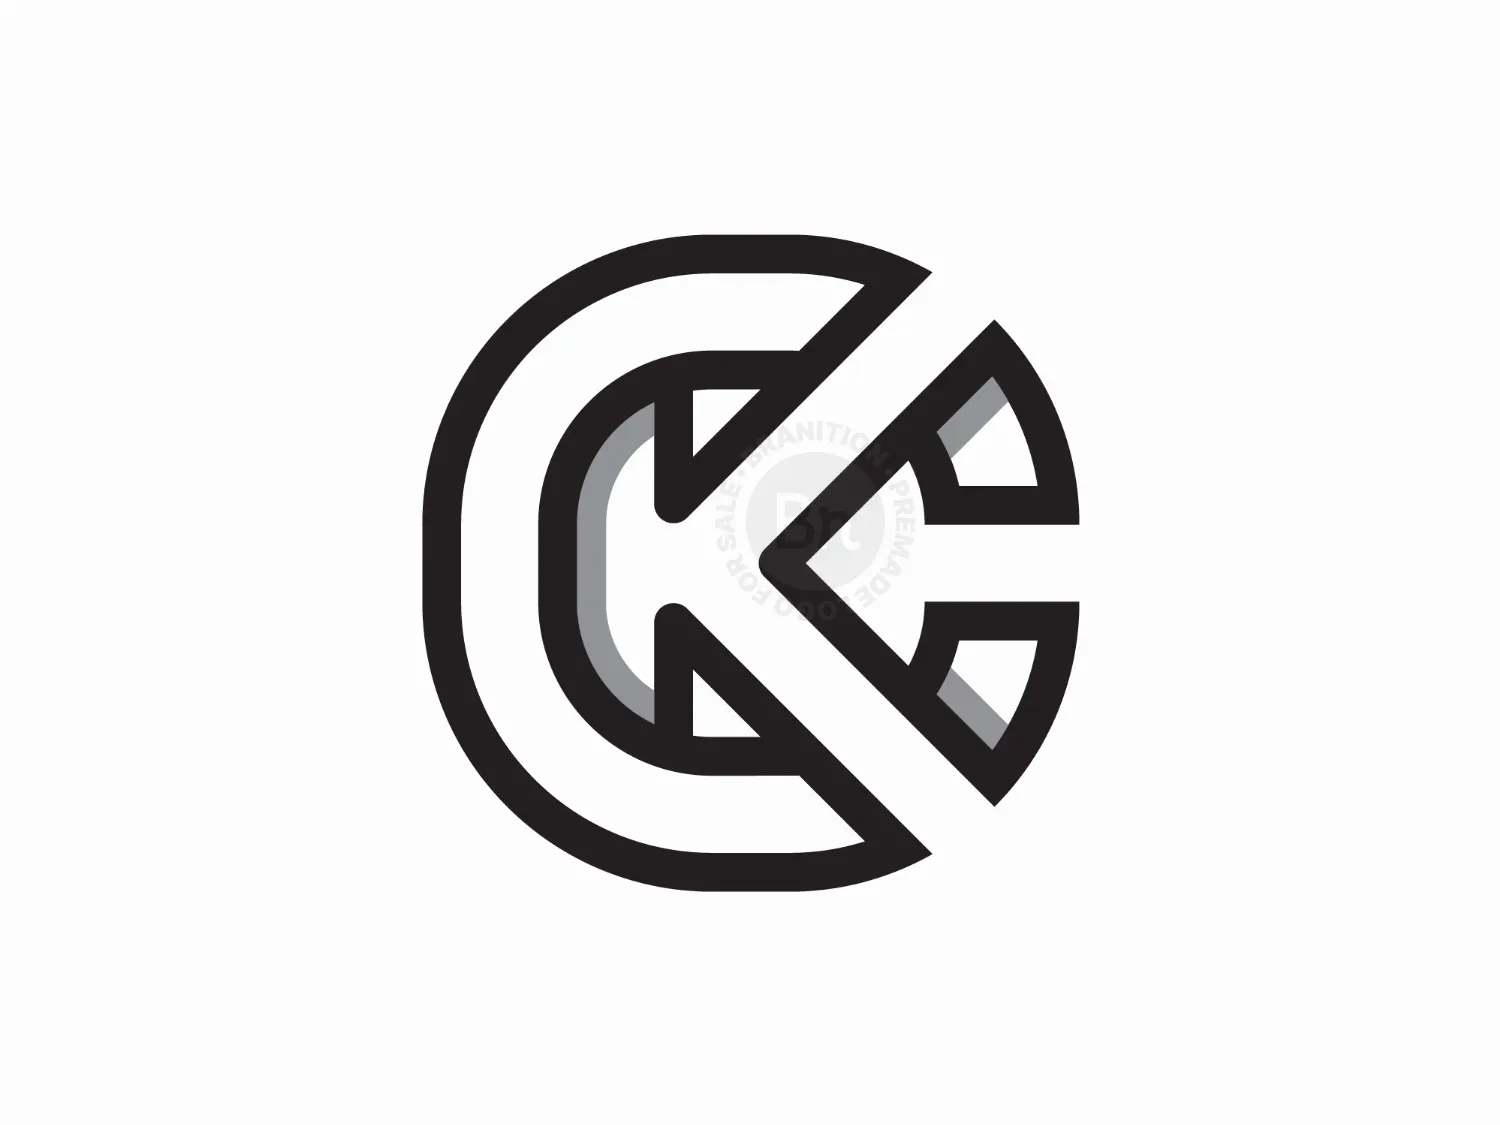 CK Monogram